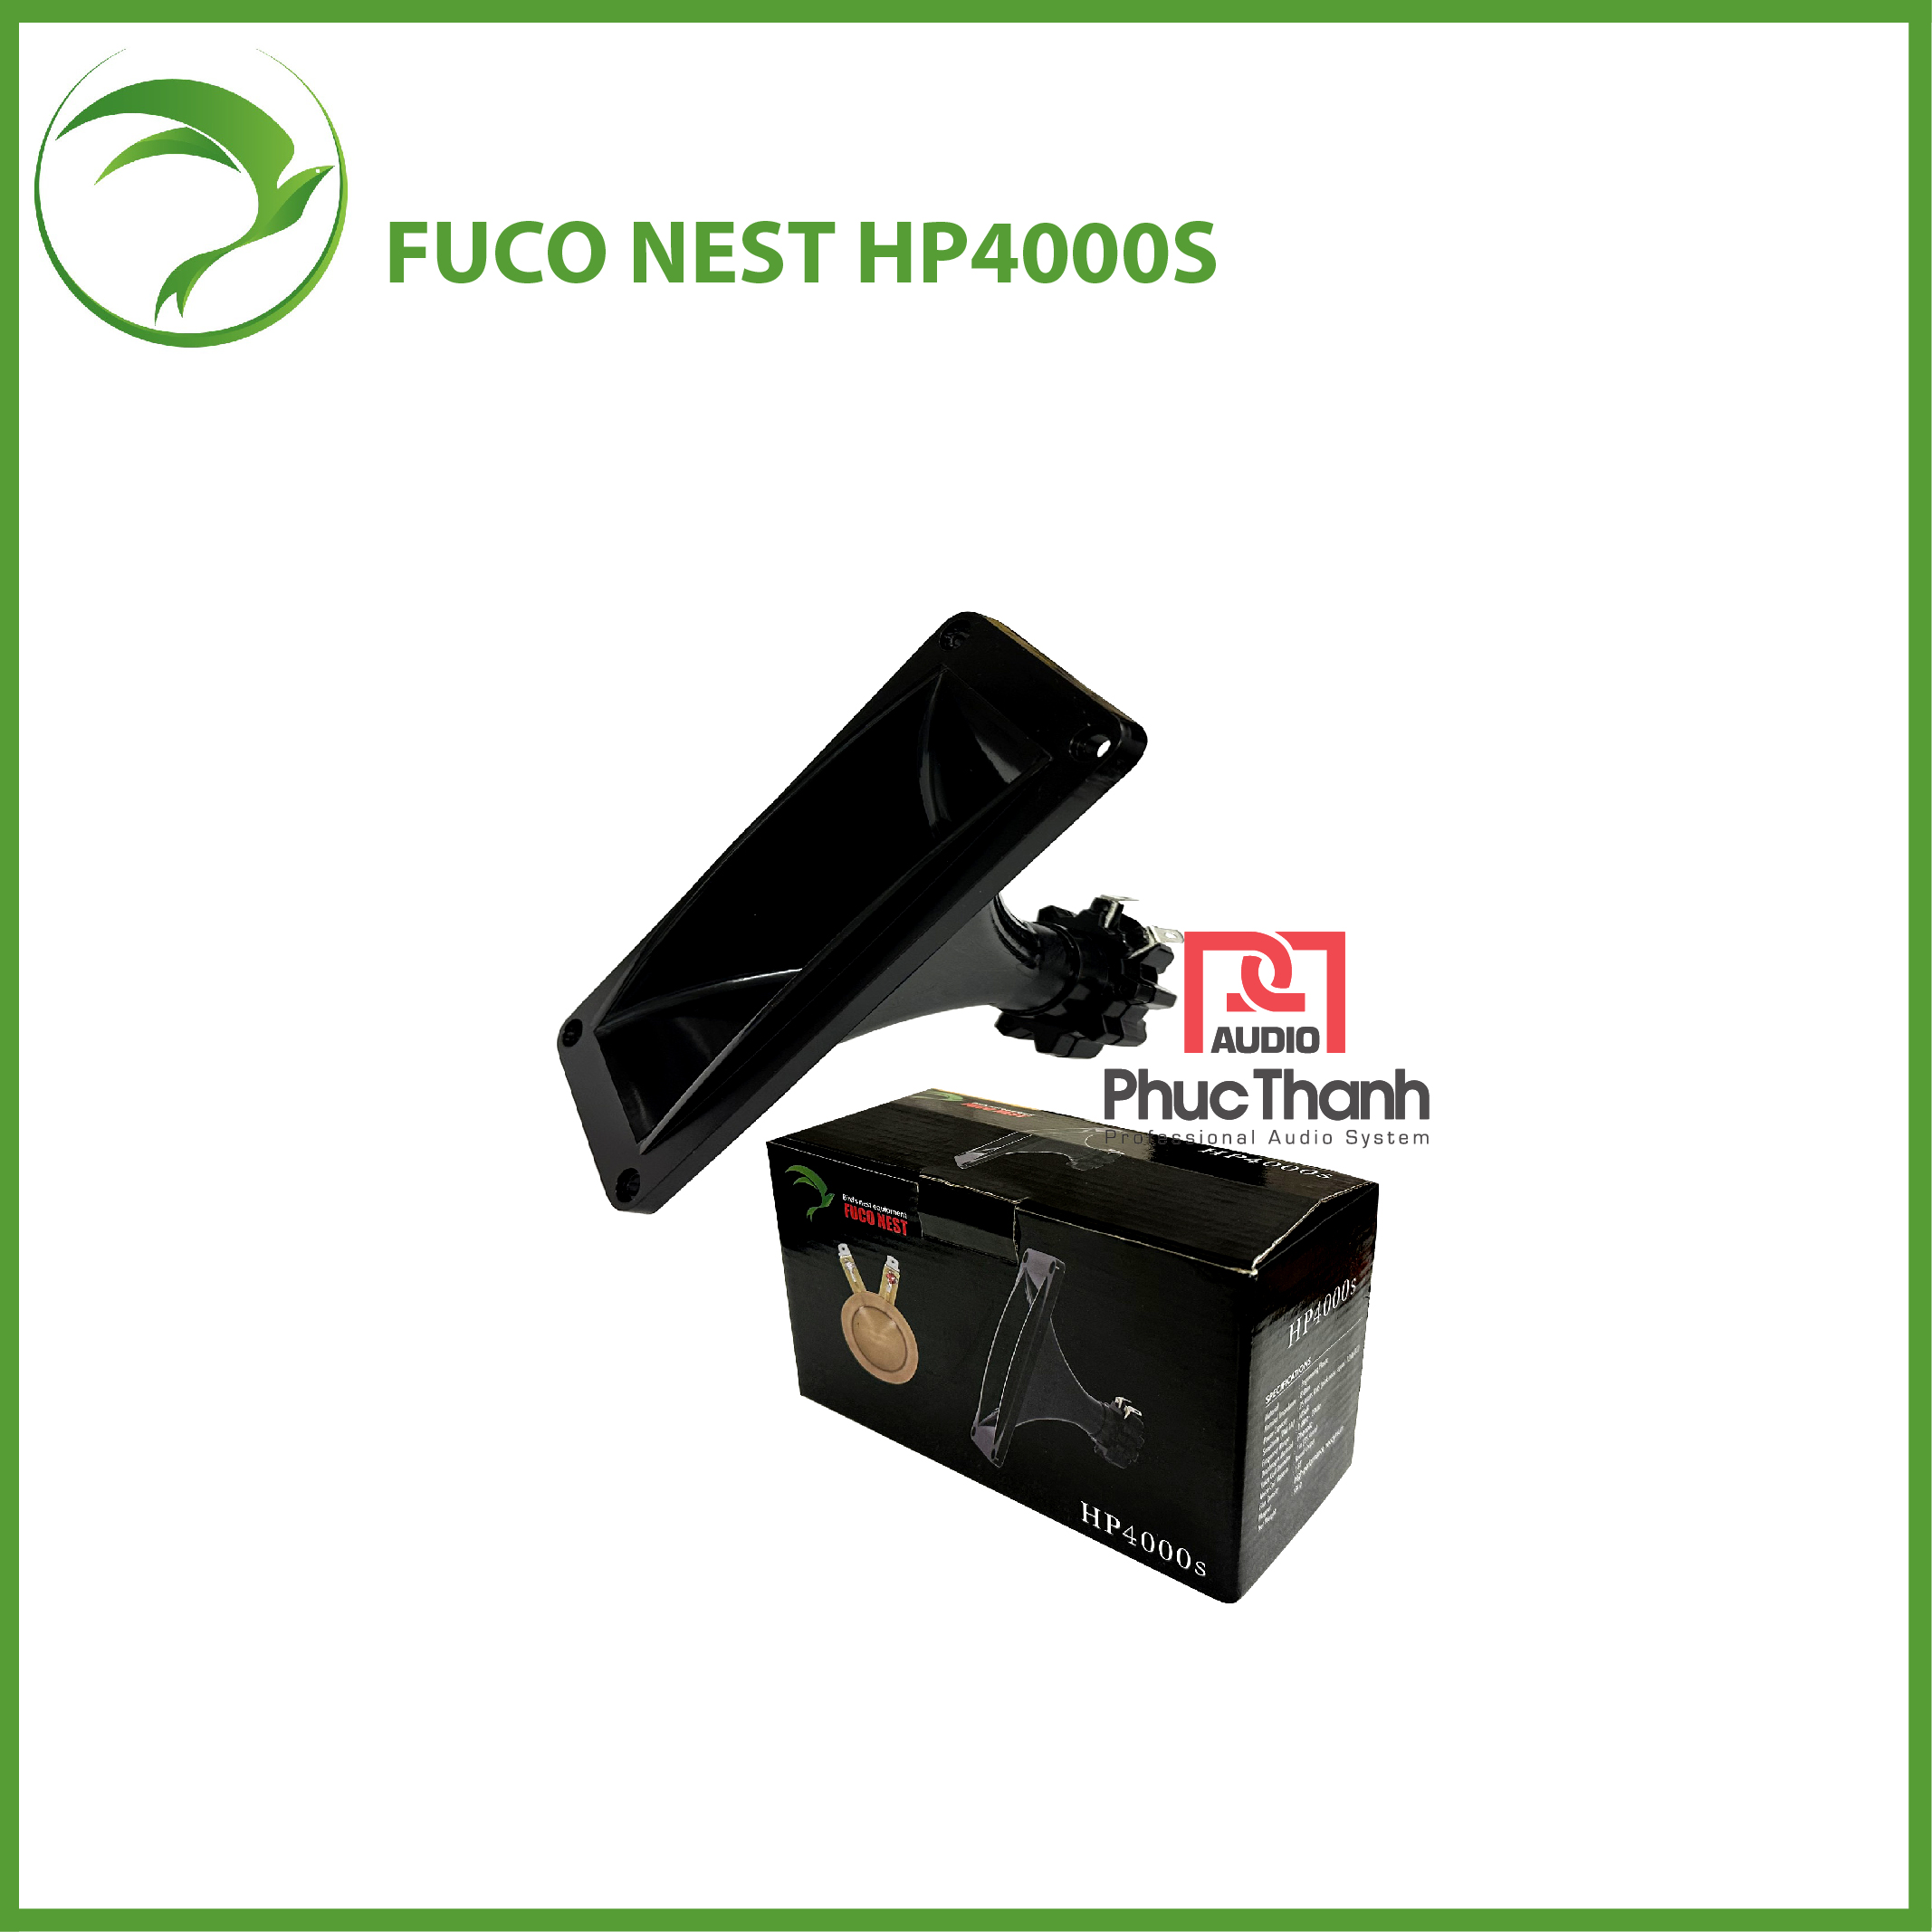 Loa Fuco Nest HP4000S